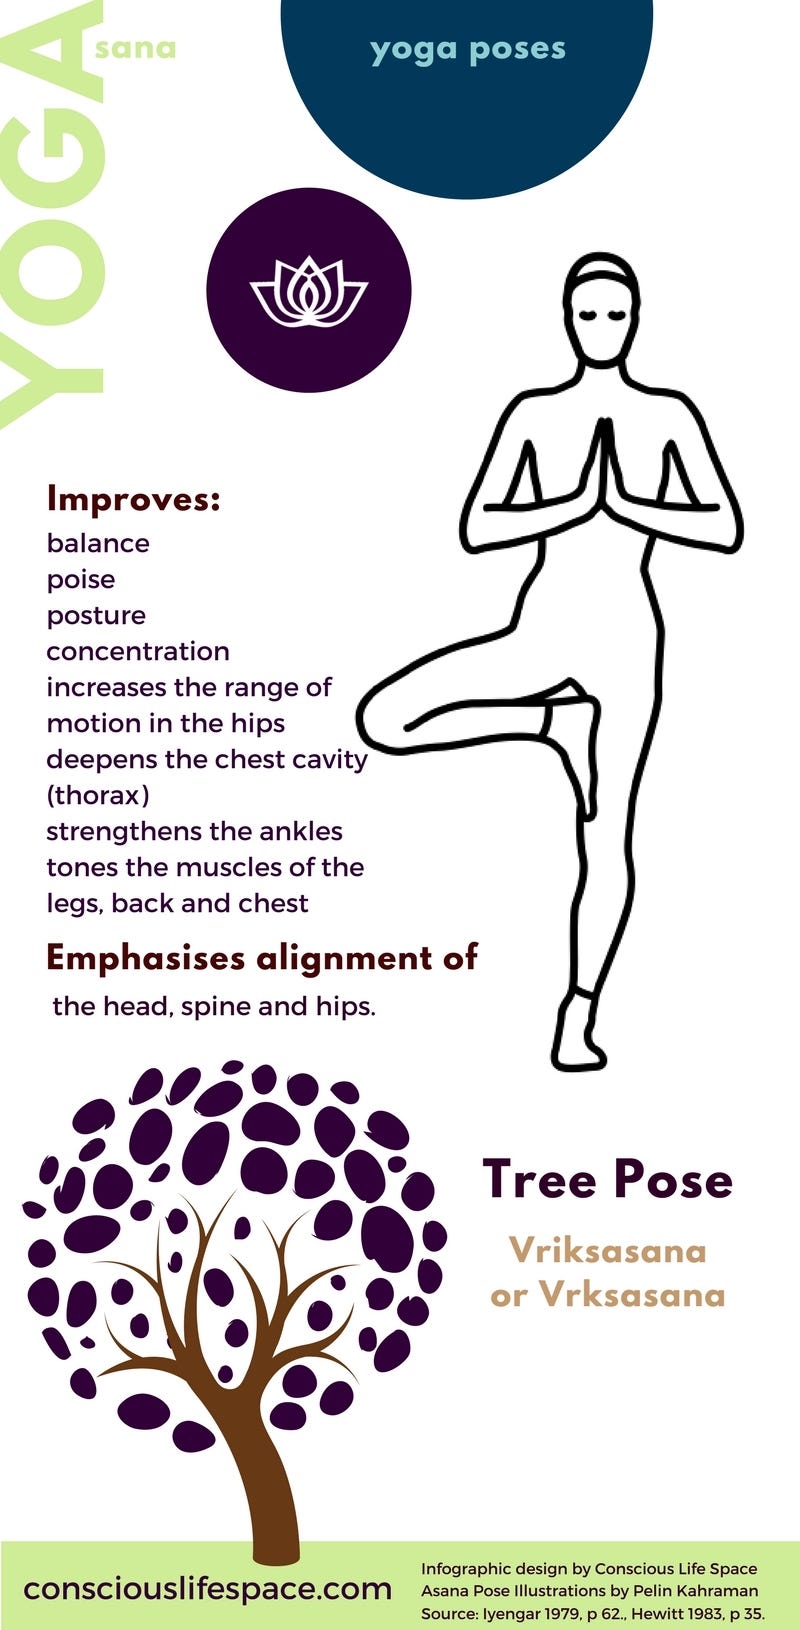 Tree Pose Infographic, Vriksasana by Conscious Life Space (License CC 4.0 Intl Attribution)